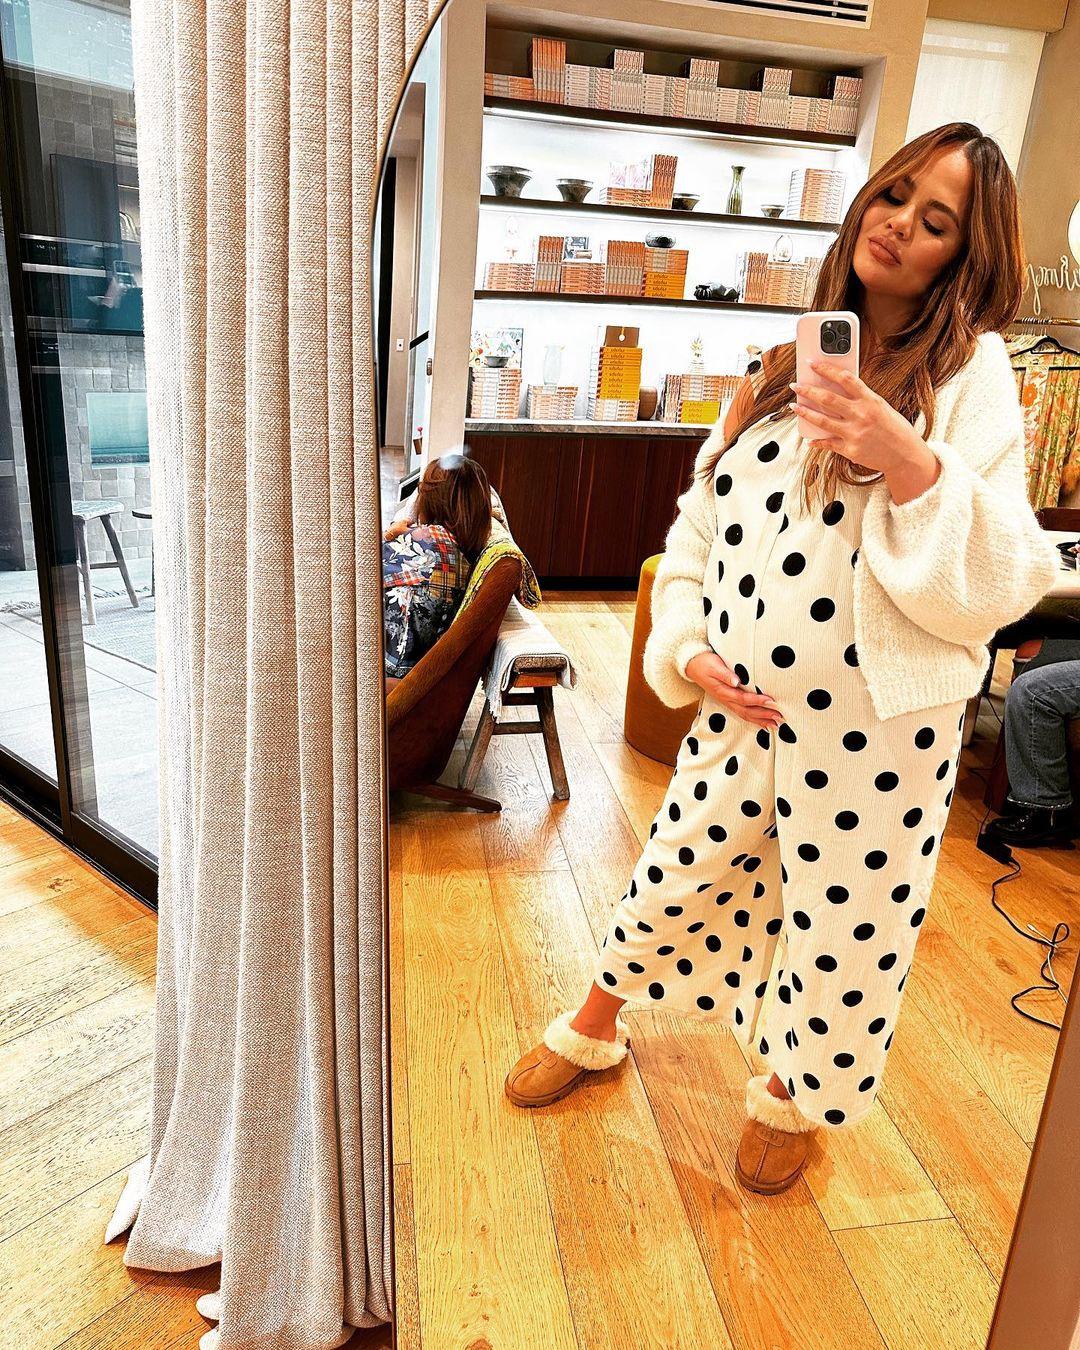 Chrissy Teigen shows off her baby bump on Instagram